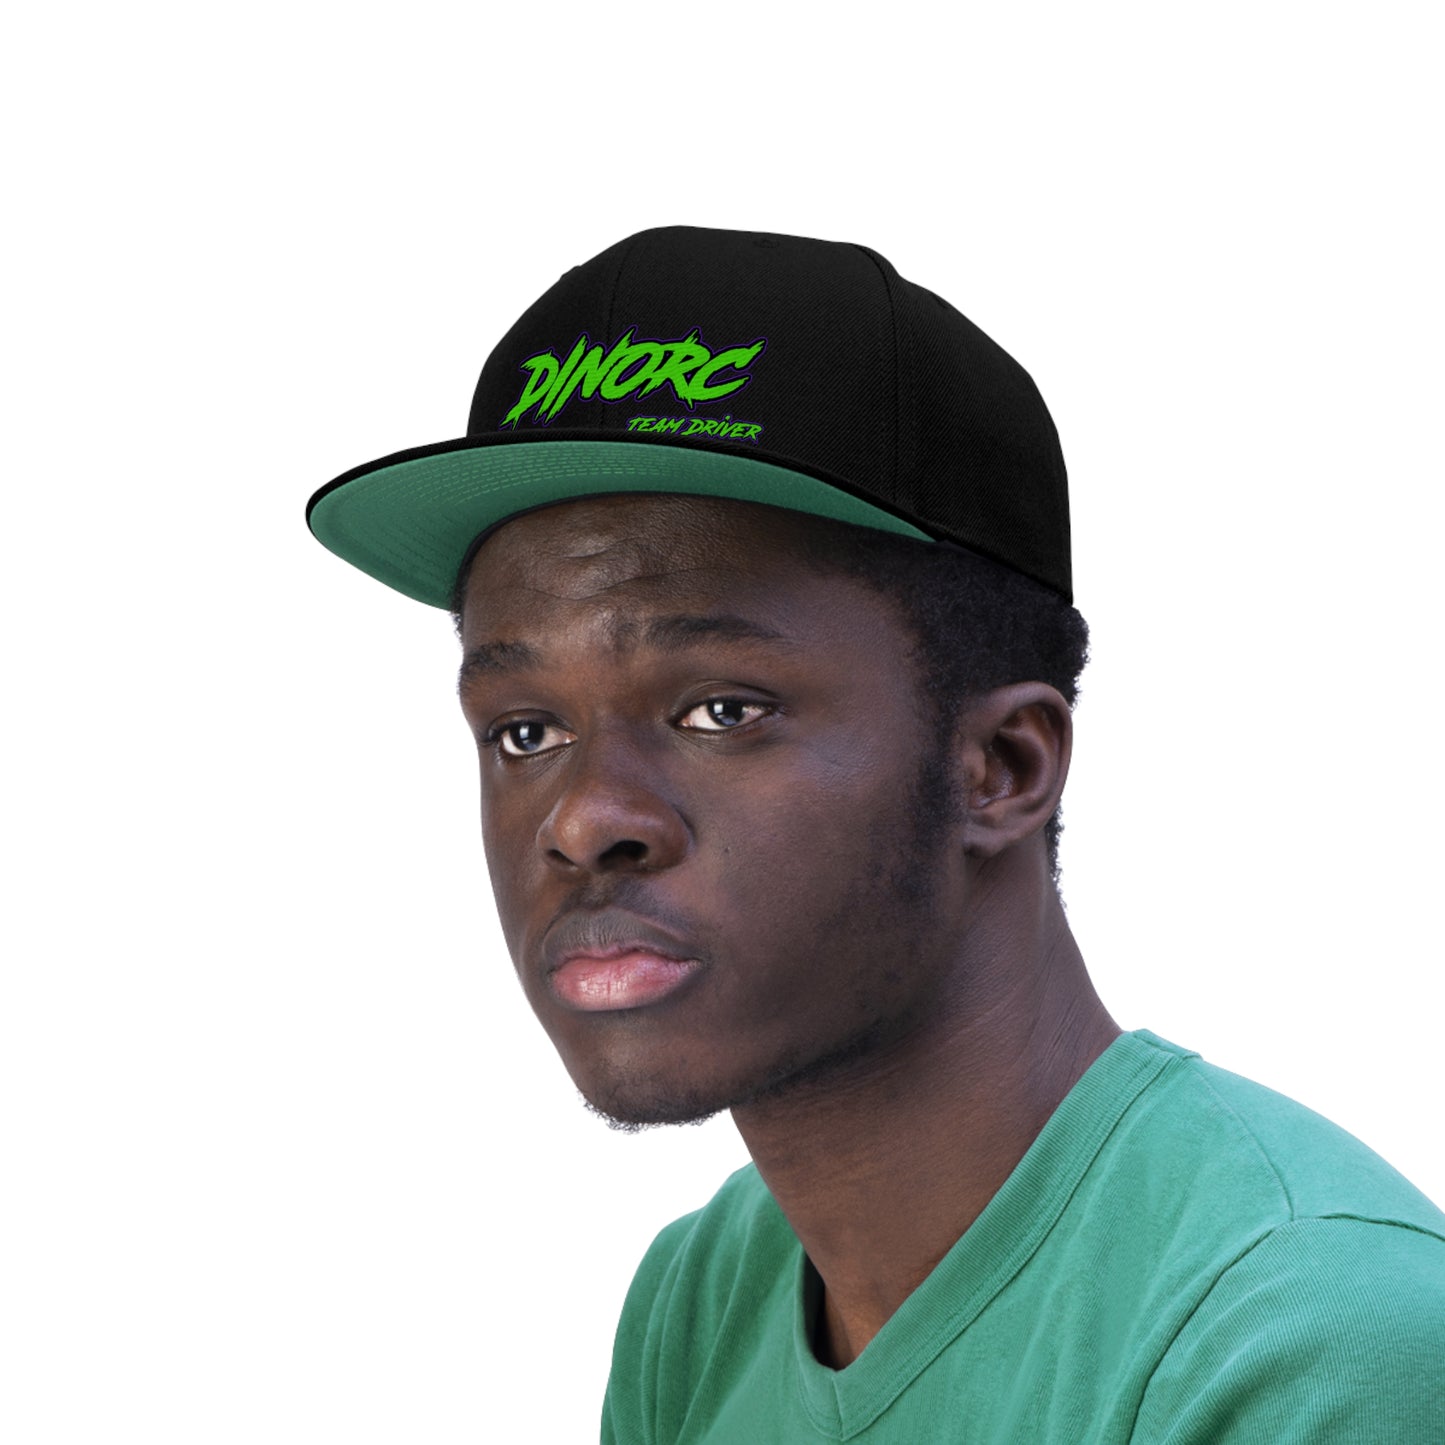 Black Green DinoRC Logoed  Flat Bill Hat